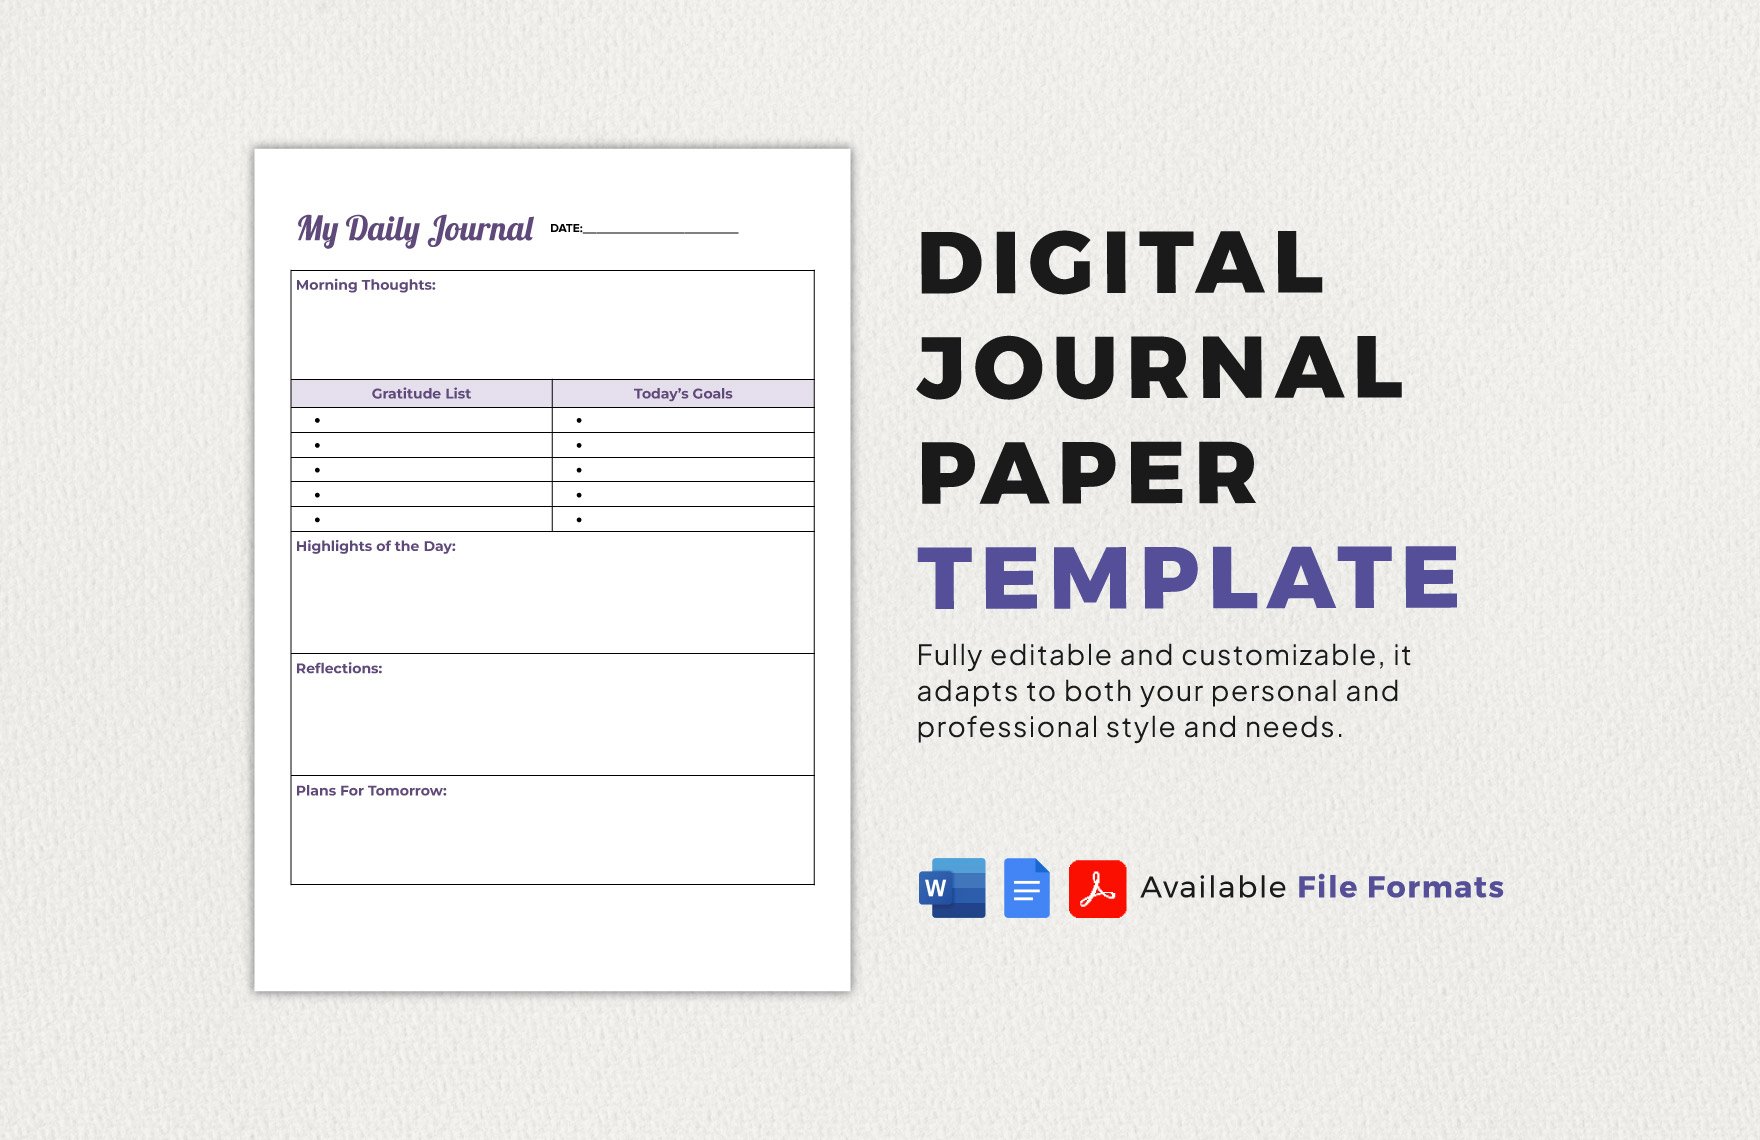 Digital Journal Paper Template